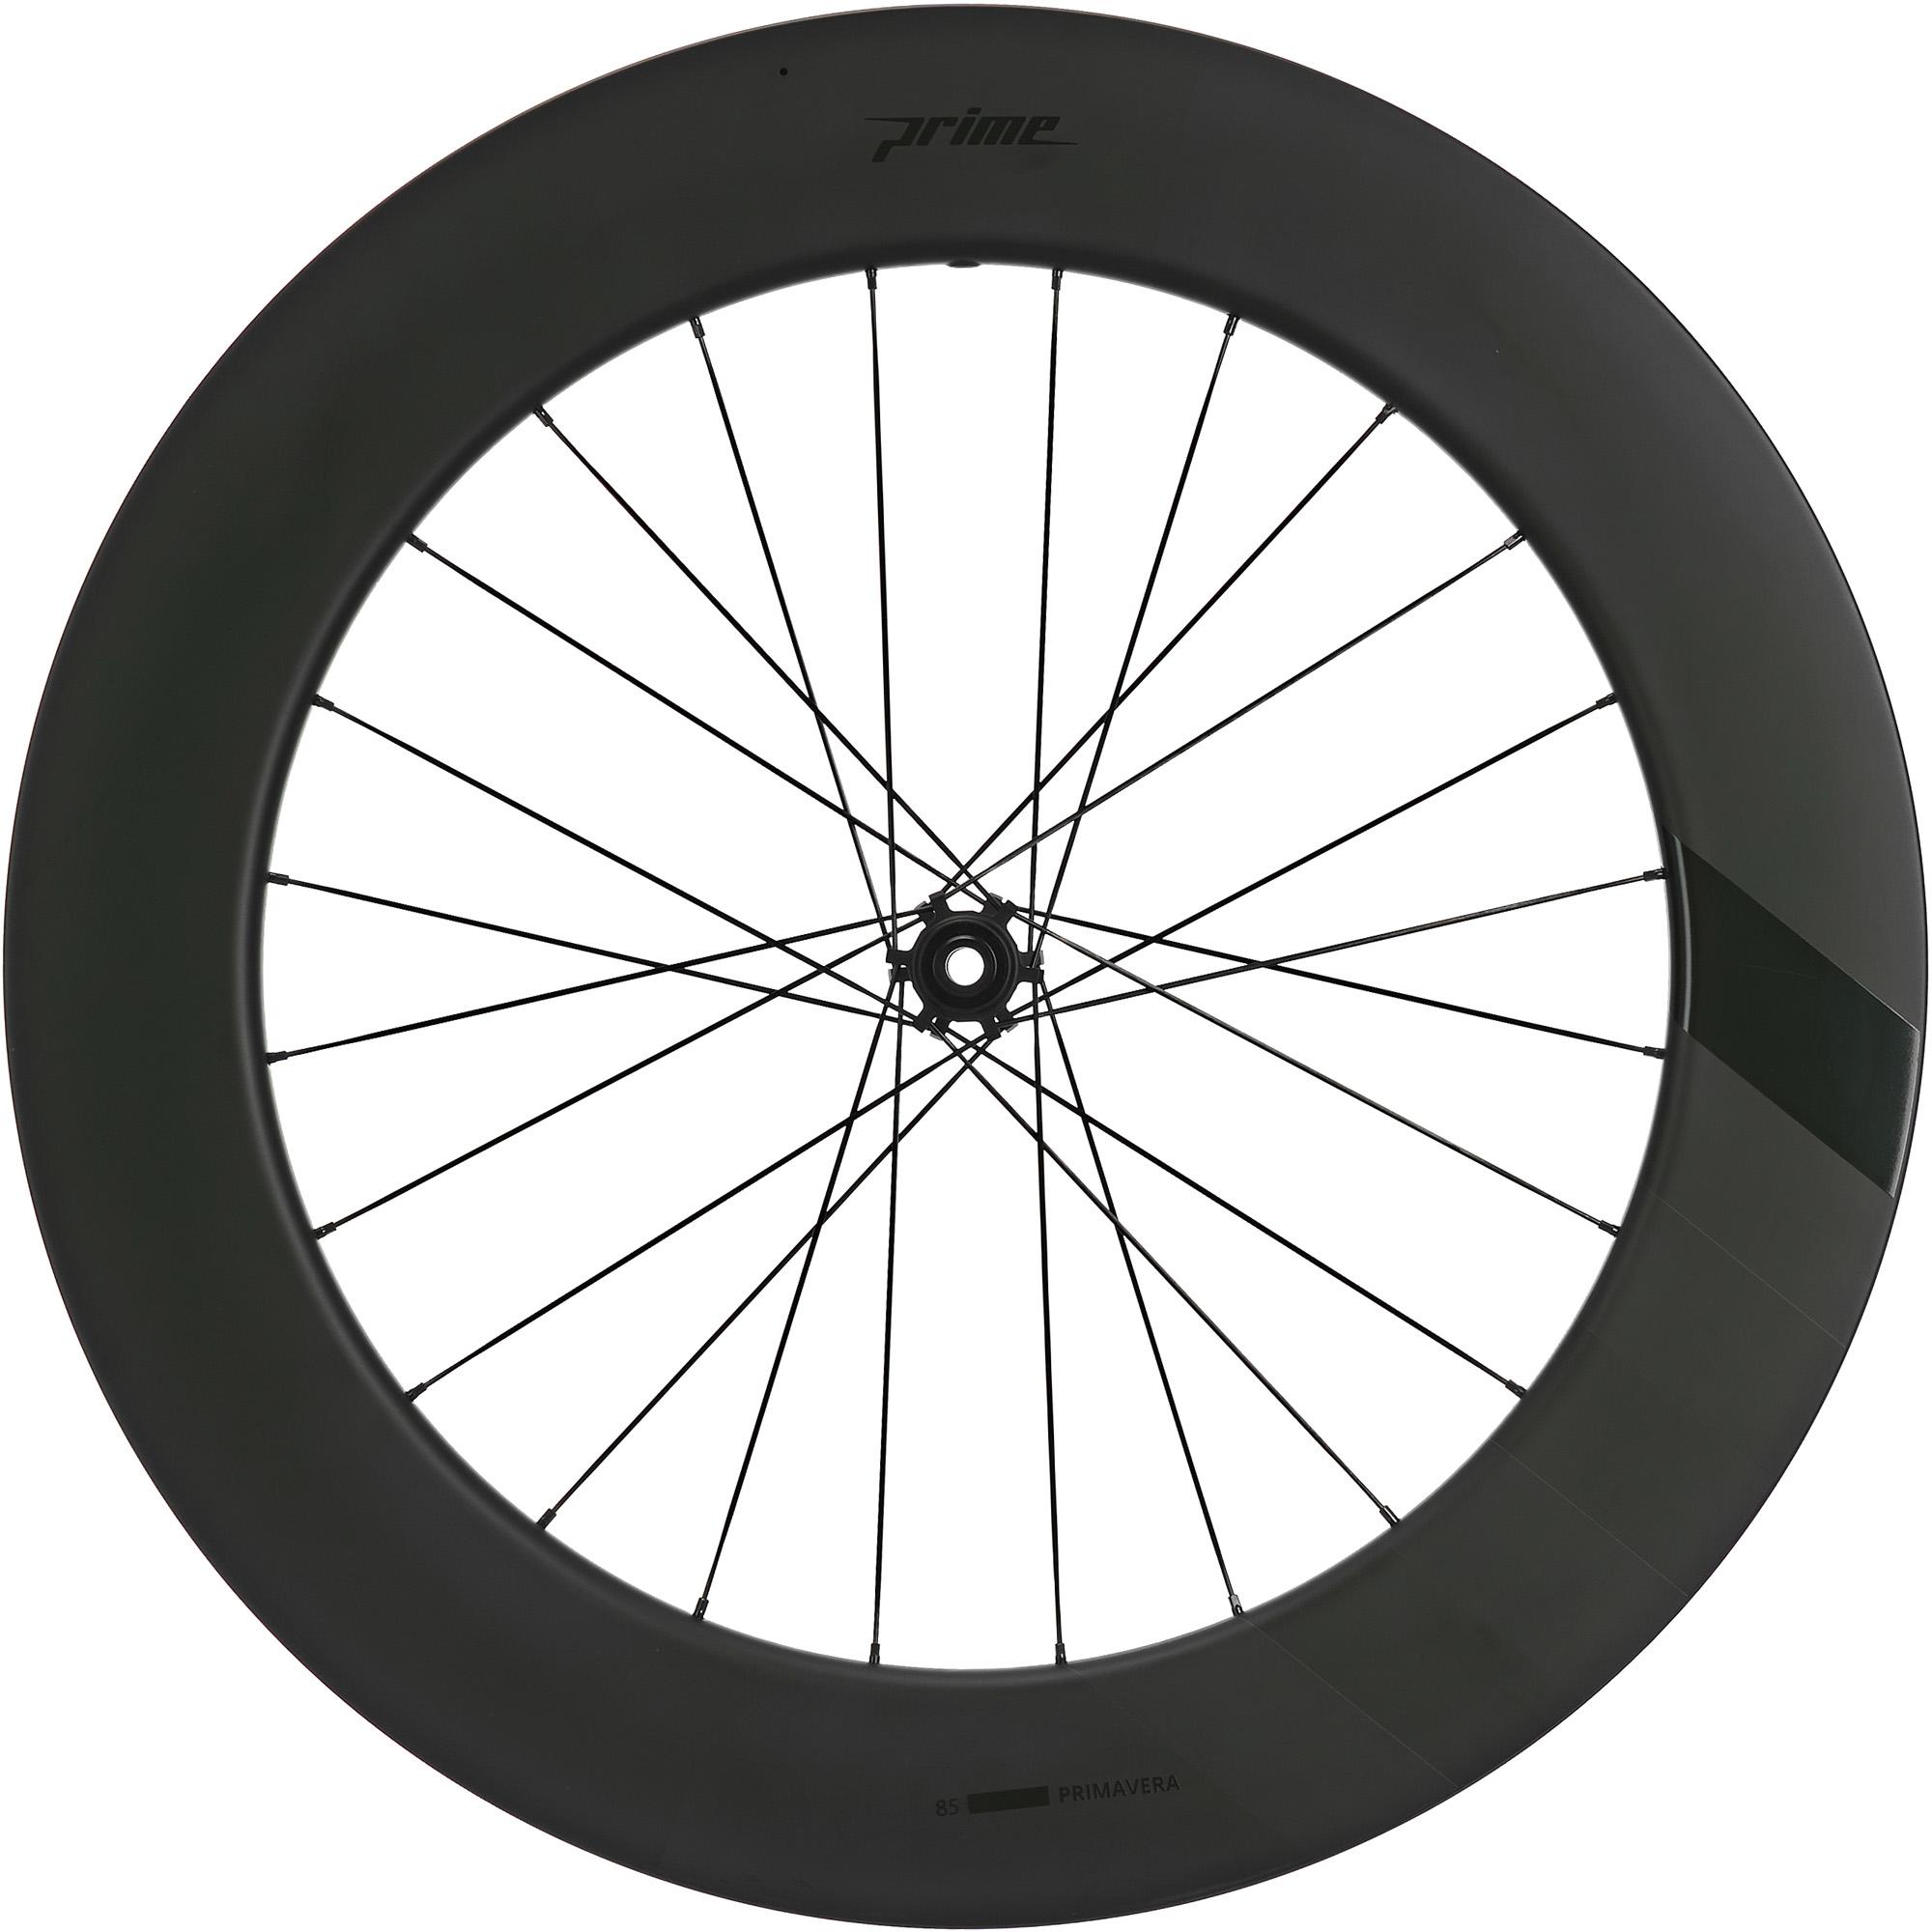 Prime Primavera 85 Carbon Disc Front Wheel - Black